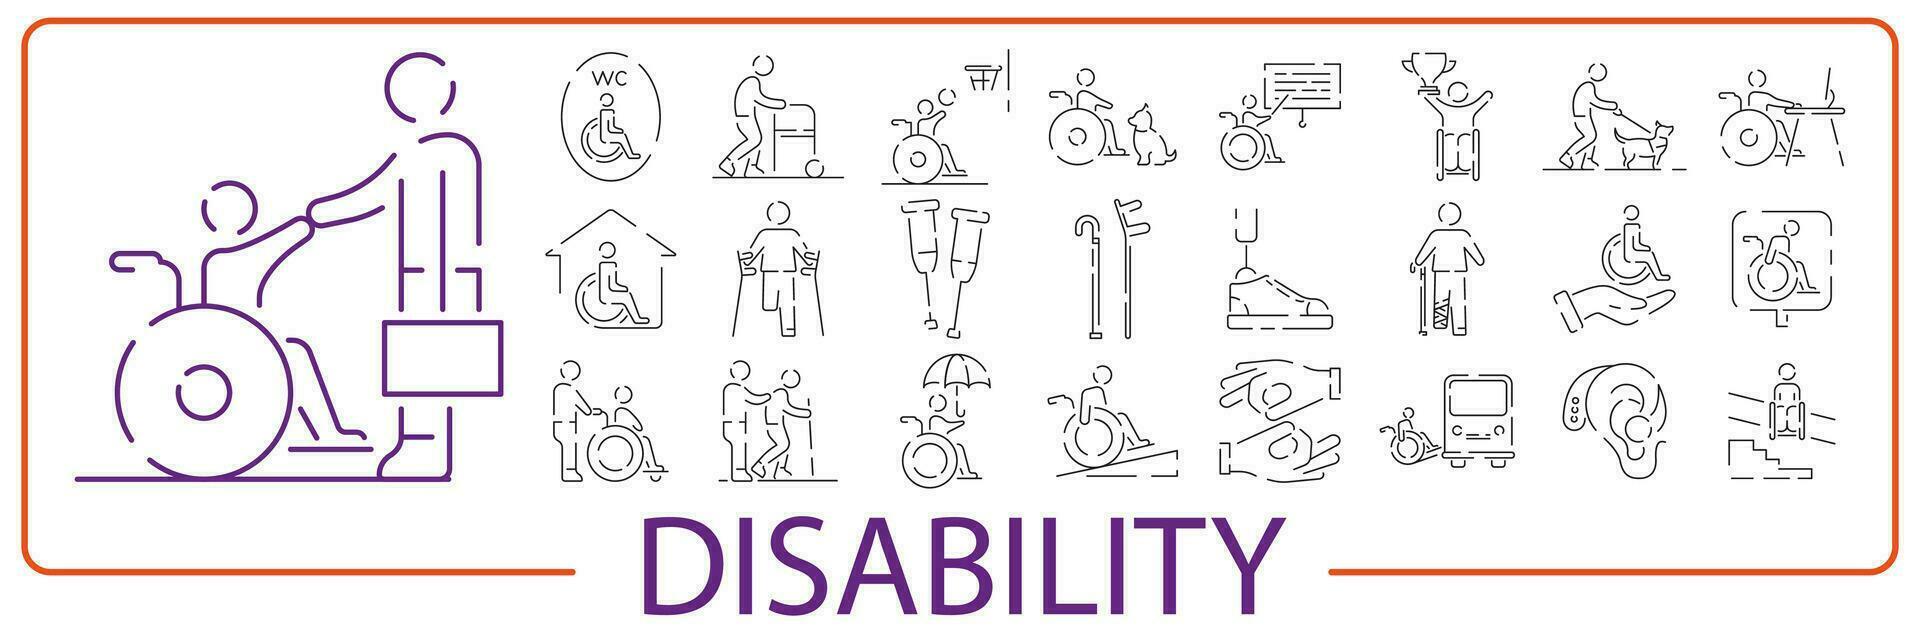 discapacitado personas íconos colocar. lineal o línea estilo iconos vector ilustración social asunto.